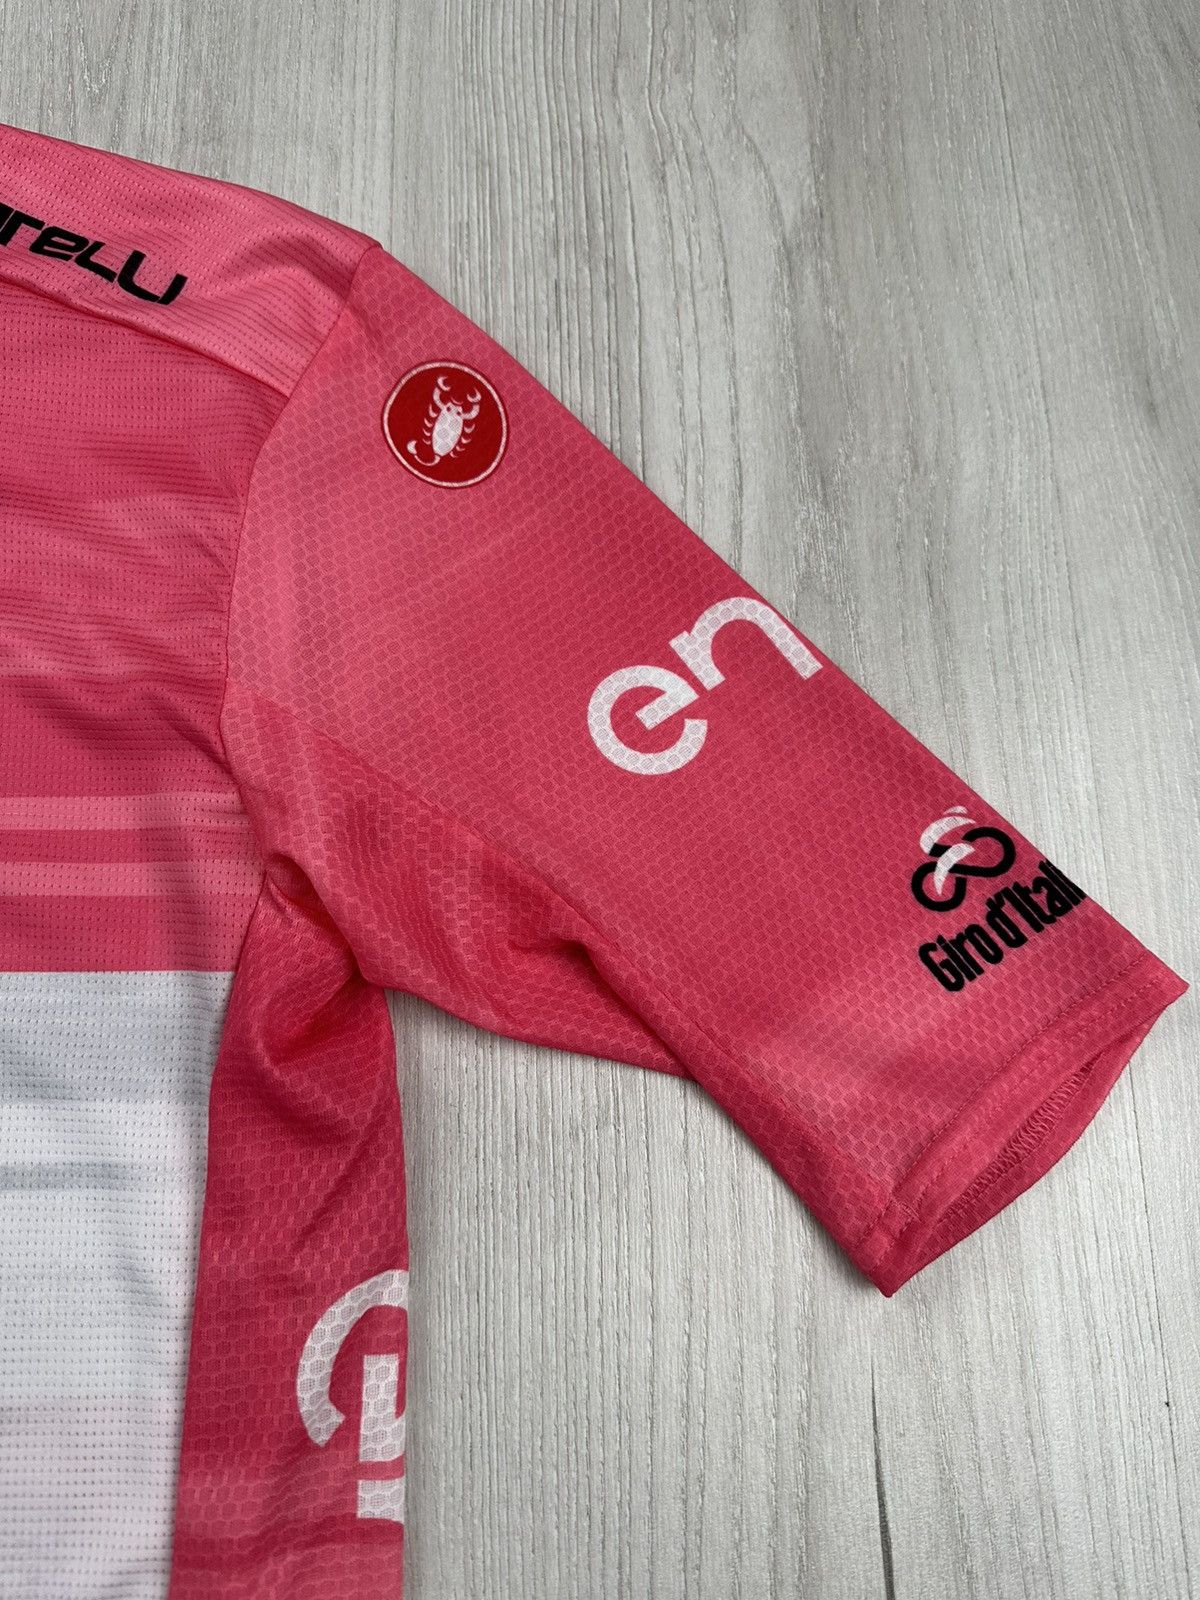 Cycle Castelli x Giro D italia Cycling Shirt Jersey Size US XL / EU 56 / 4 - 5 Thumbnail